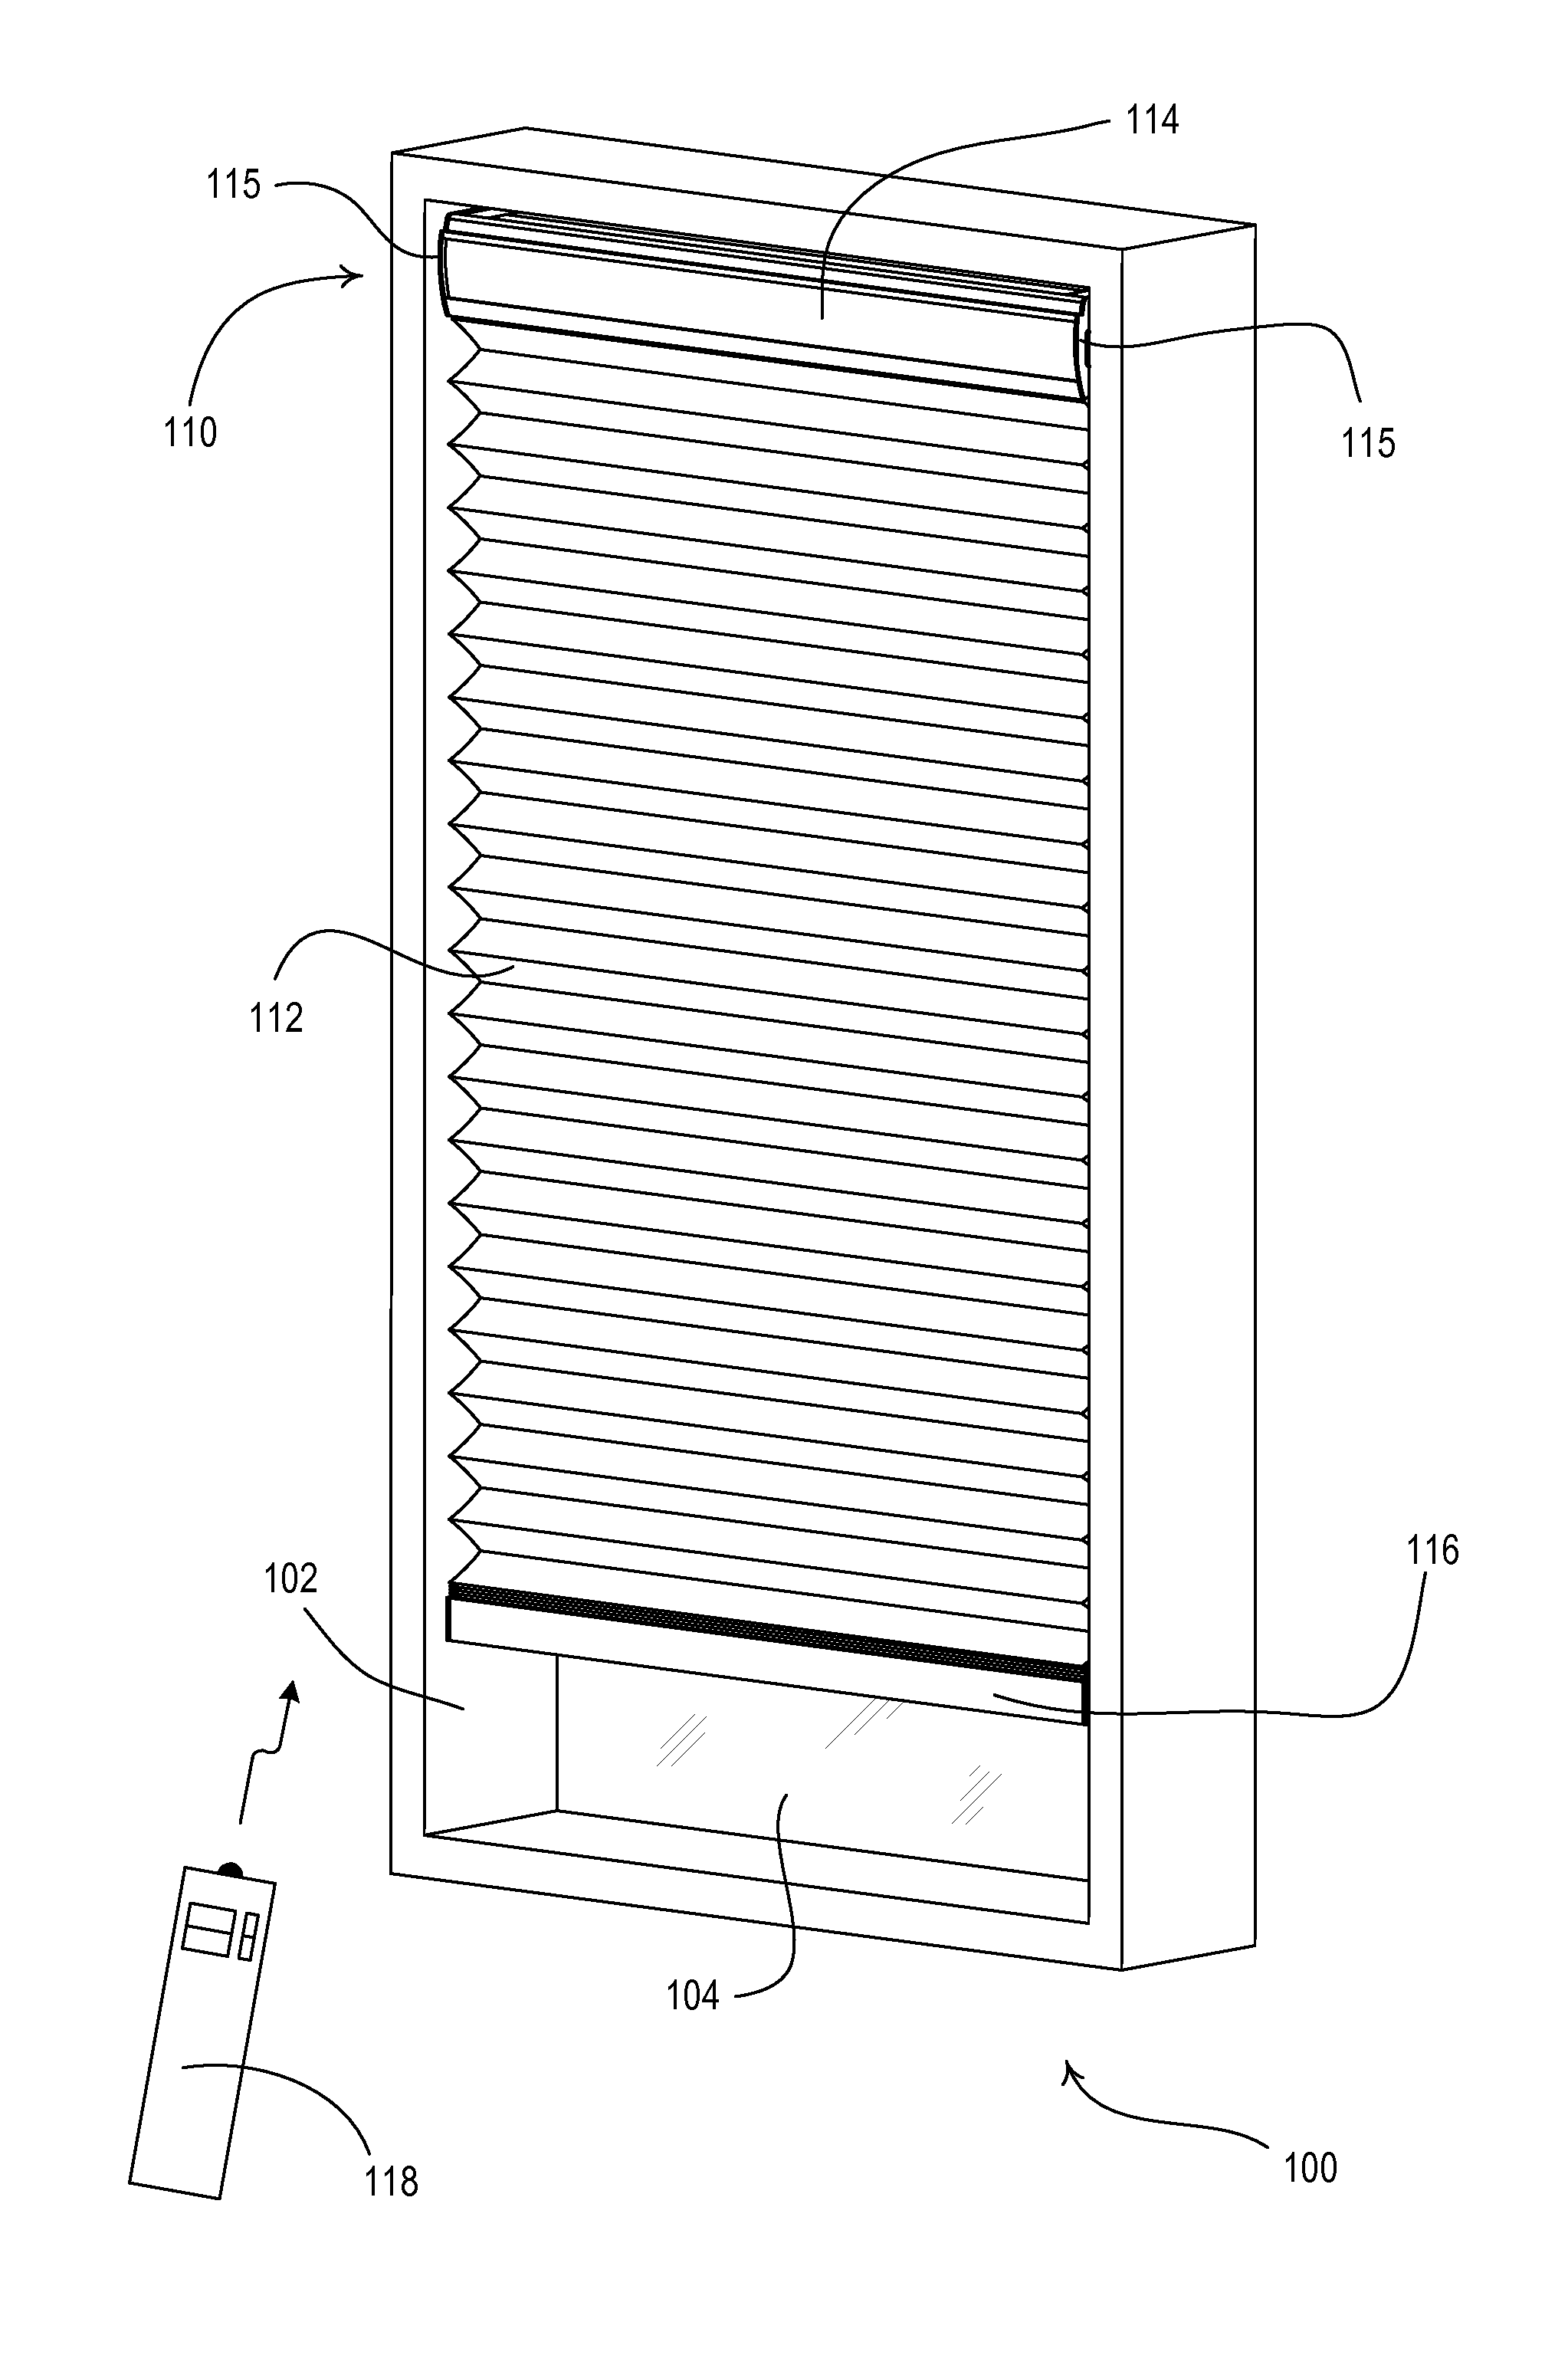 Battery-powered motorized window treatment having a service position